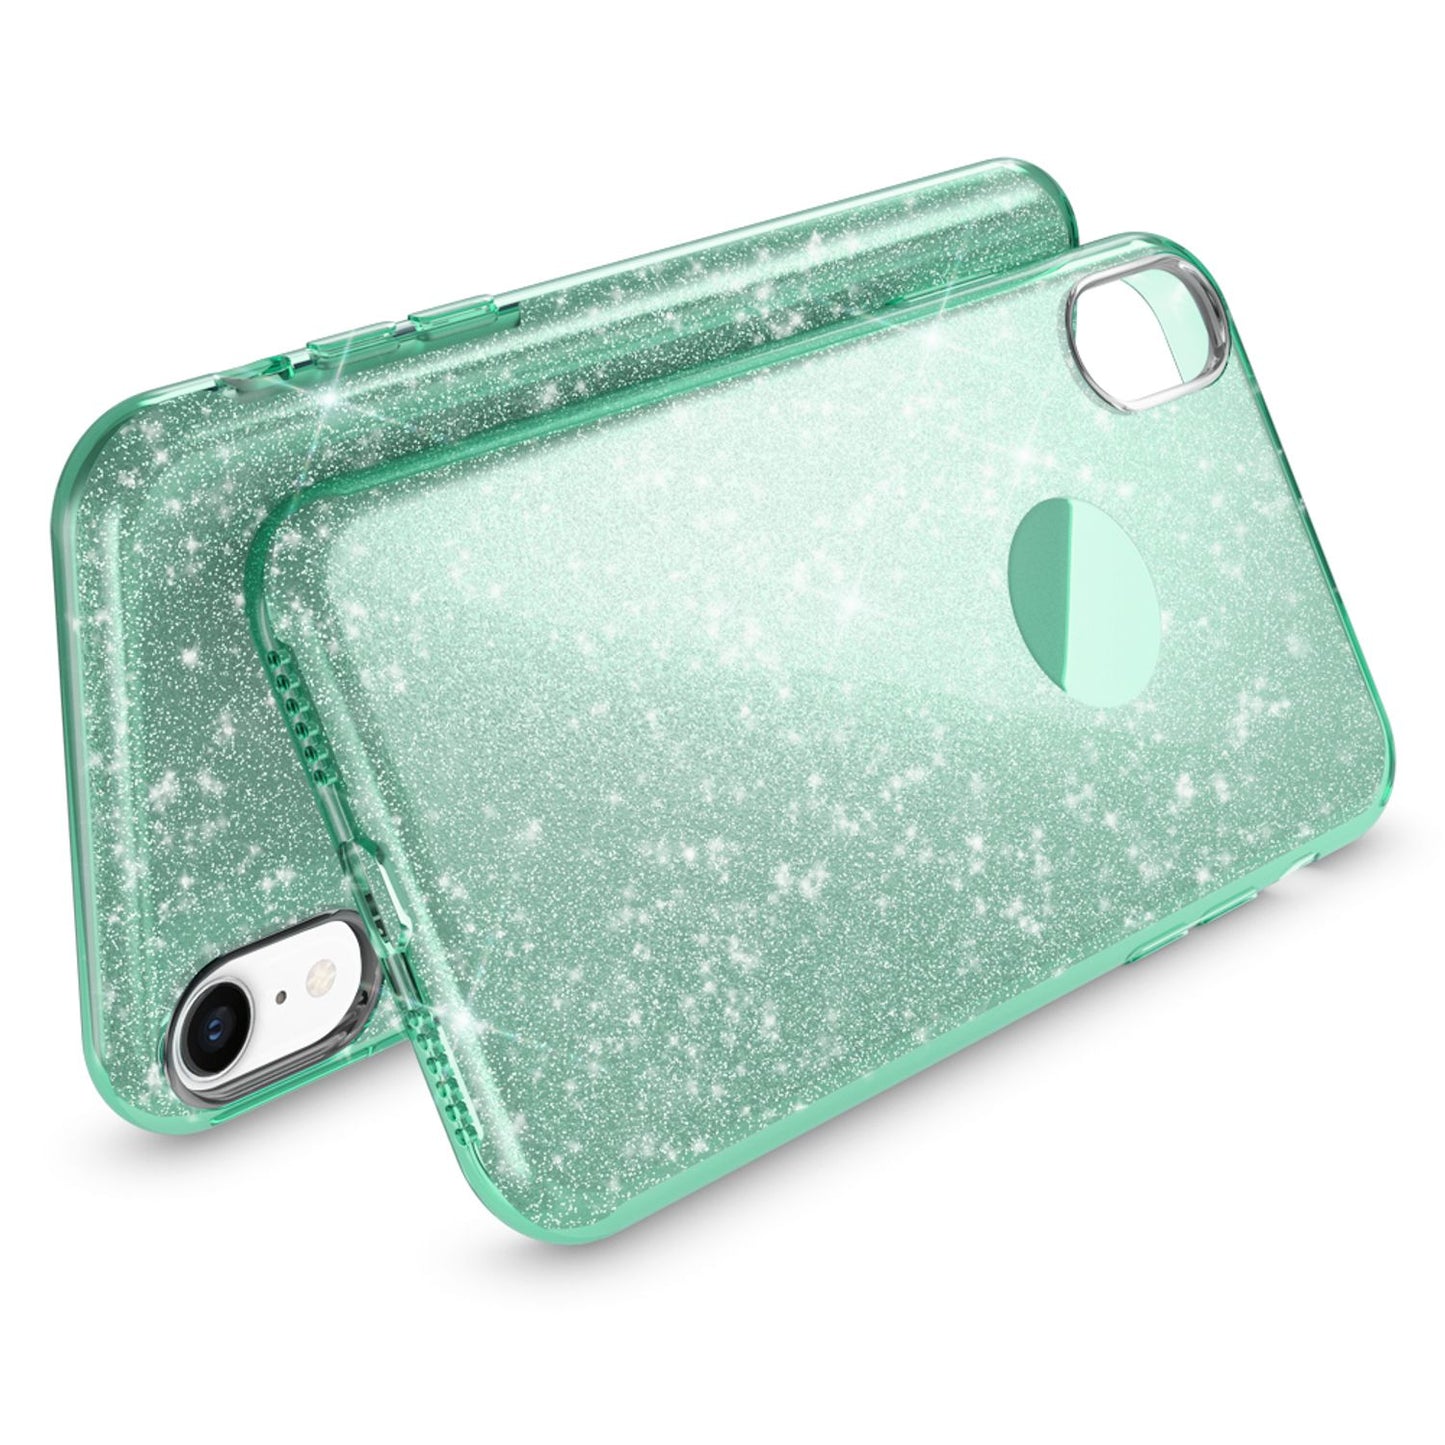 NALIA Hülle für iPhone XR, Handyhülle Glitzer Ultra-Slim Silikon-Case Back-Cover